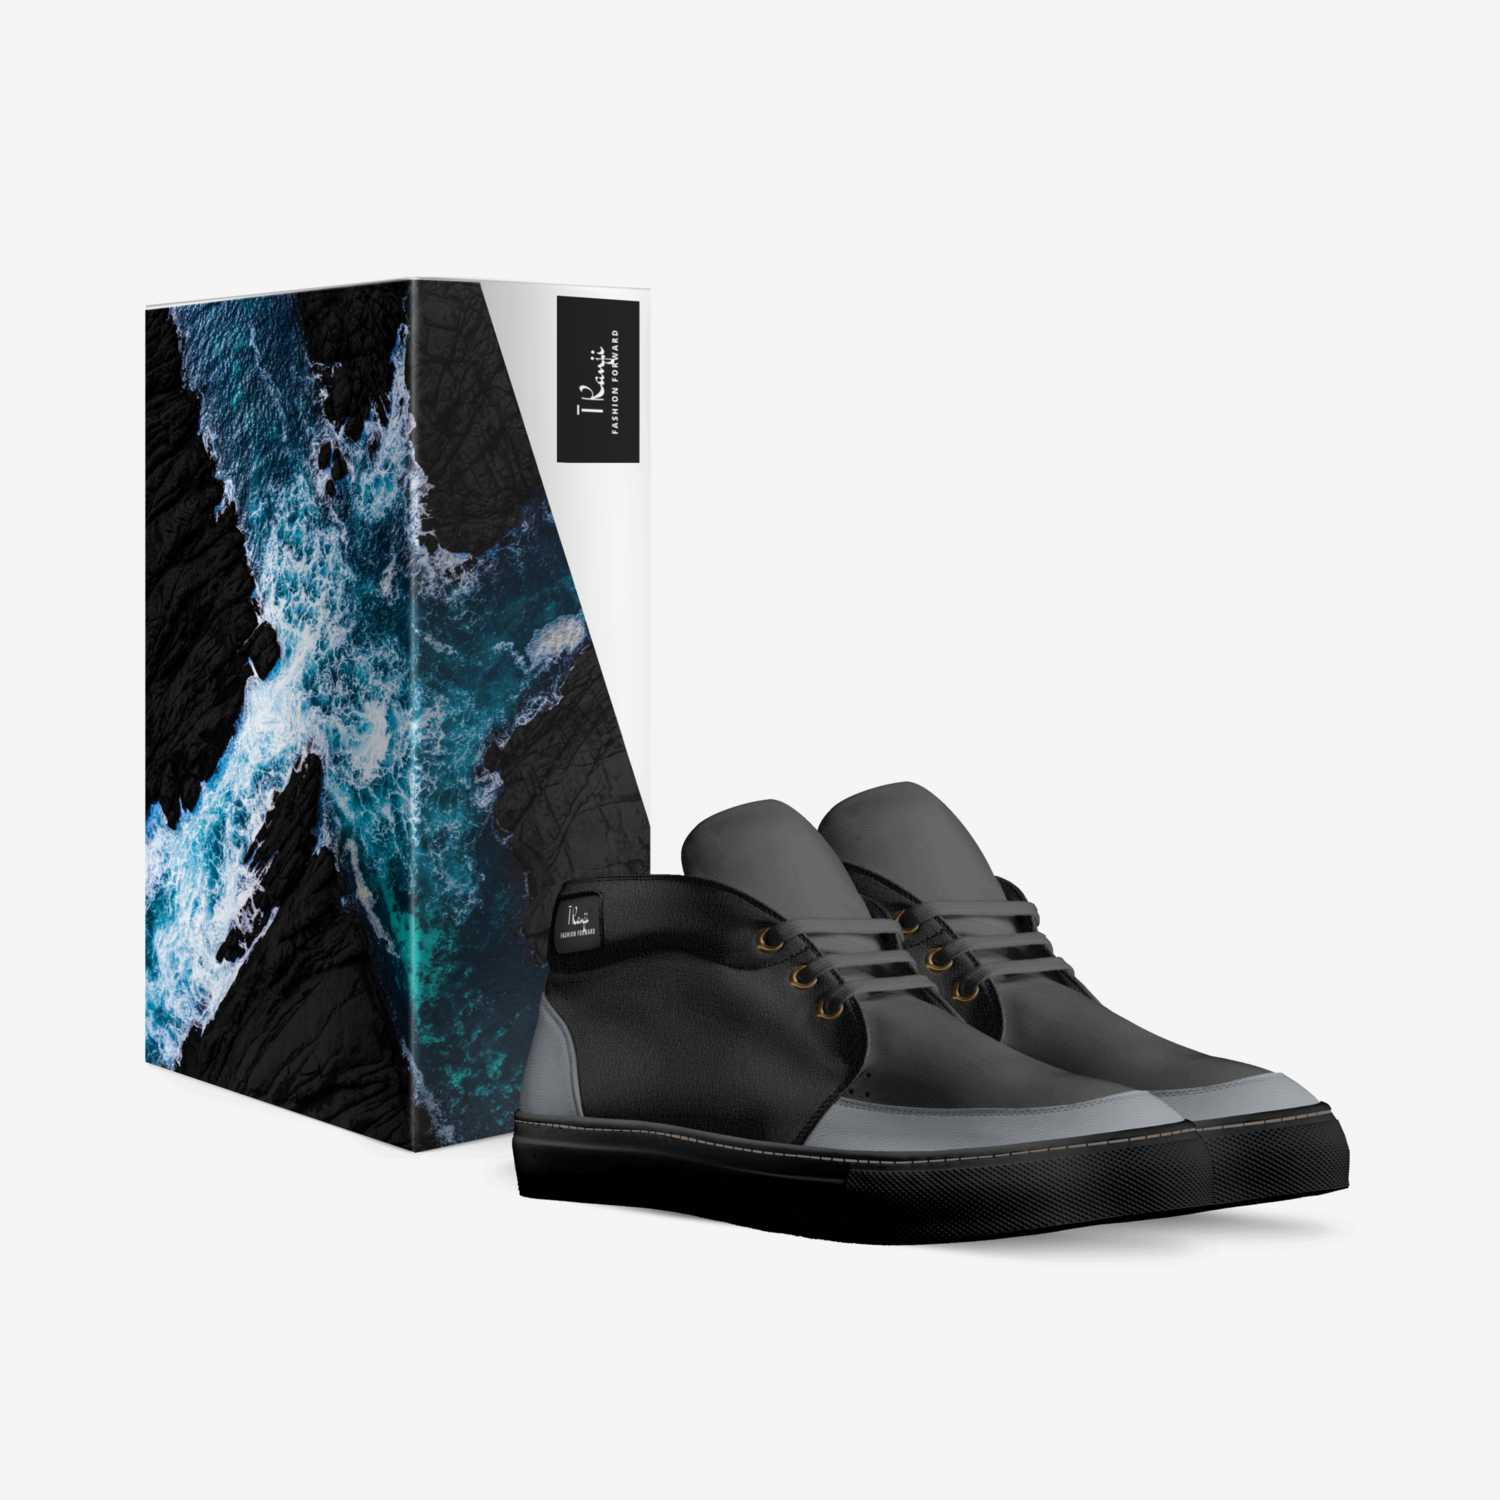 Ī kanji custom made in Italy shoes by Robby Kanji | Box view